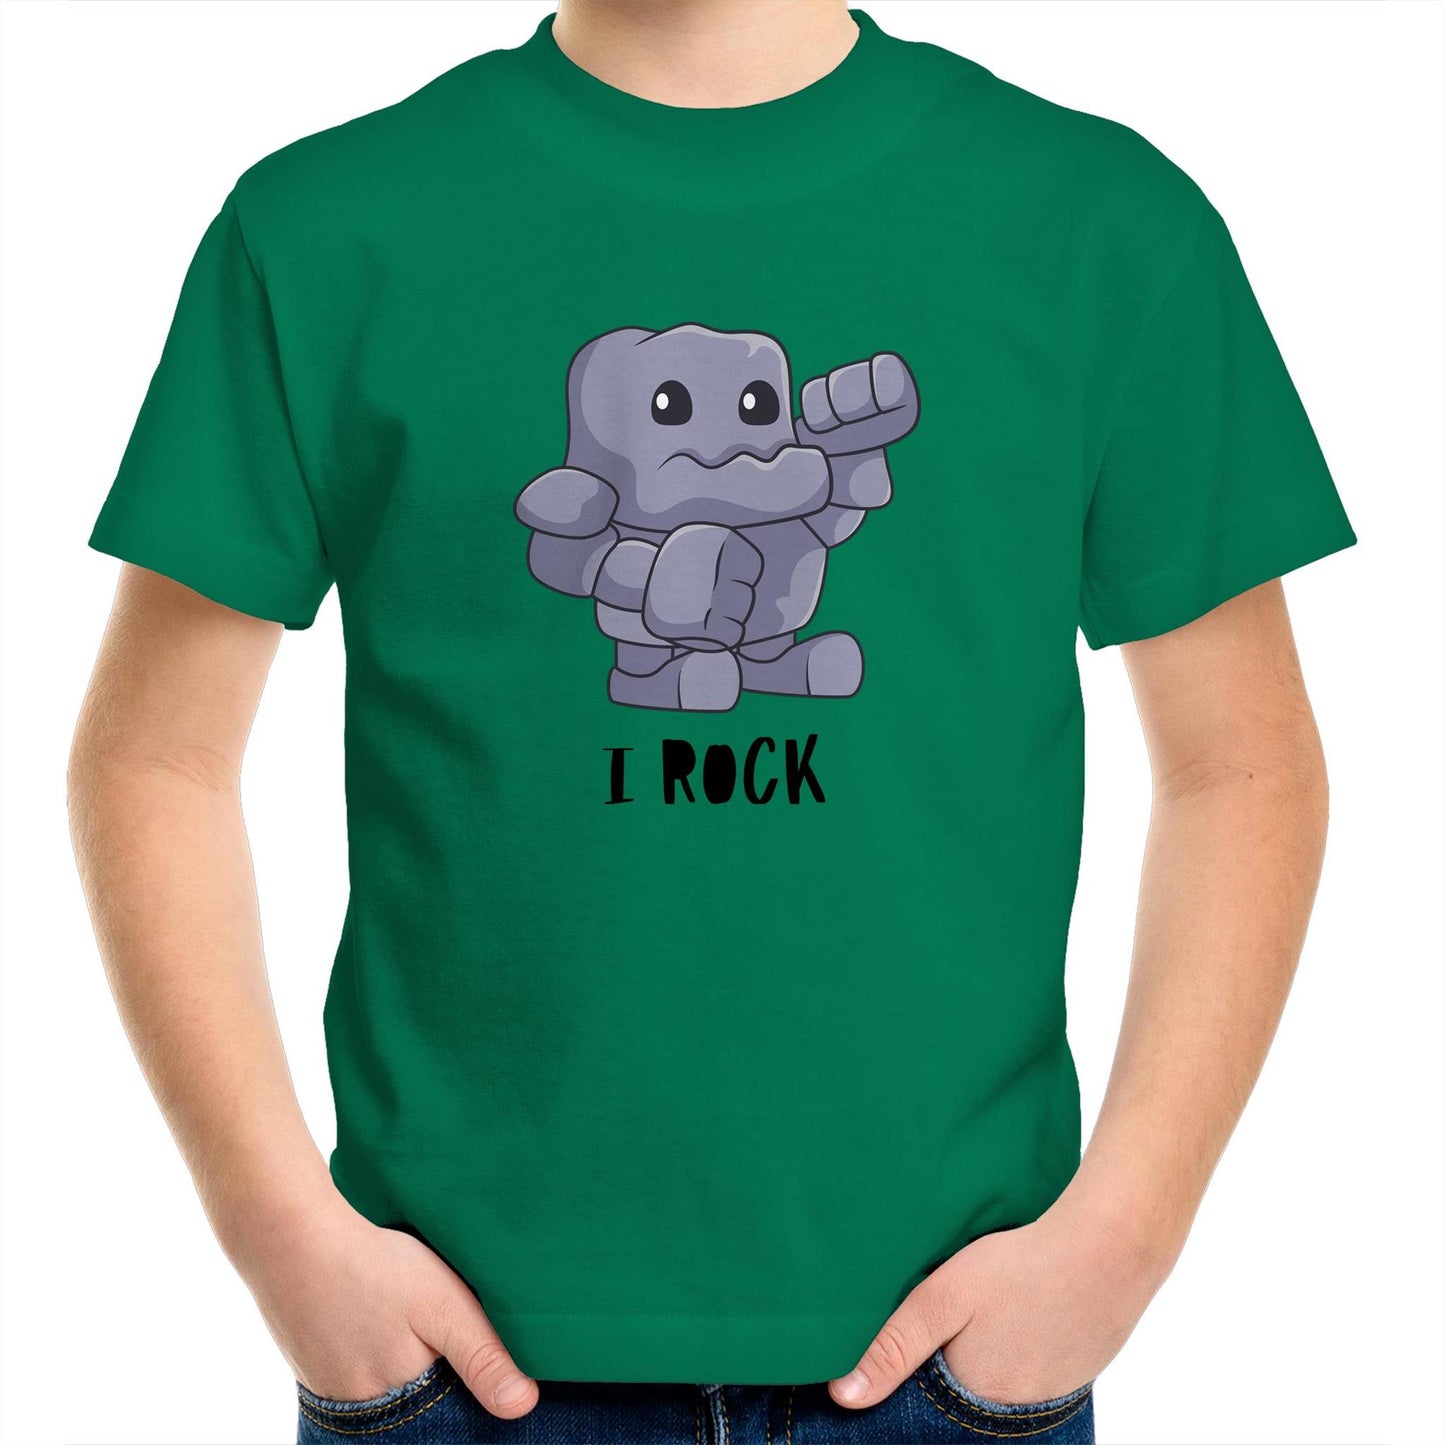 I Rock - Kids Youth T-Shirt Kelly Green Kids Youth T-shirt Music